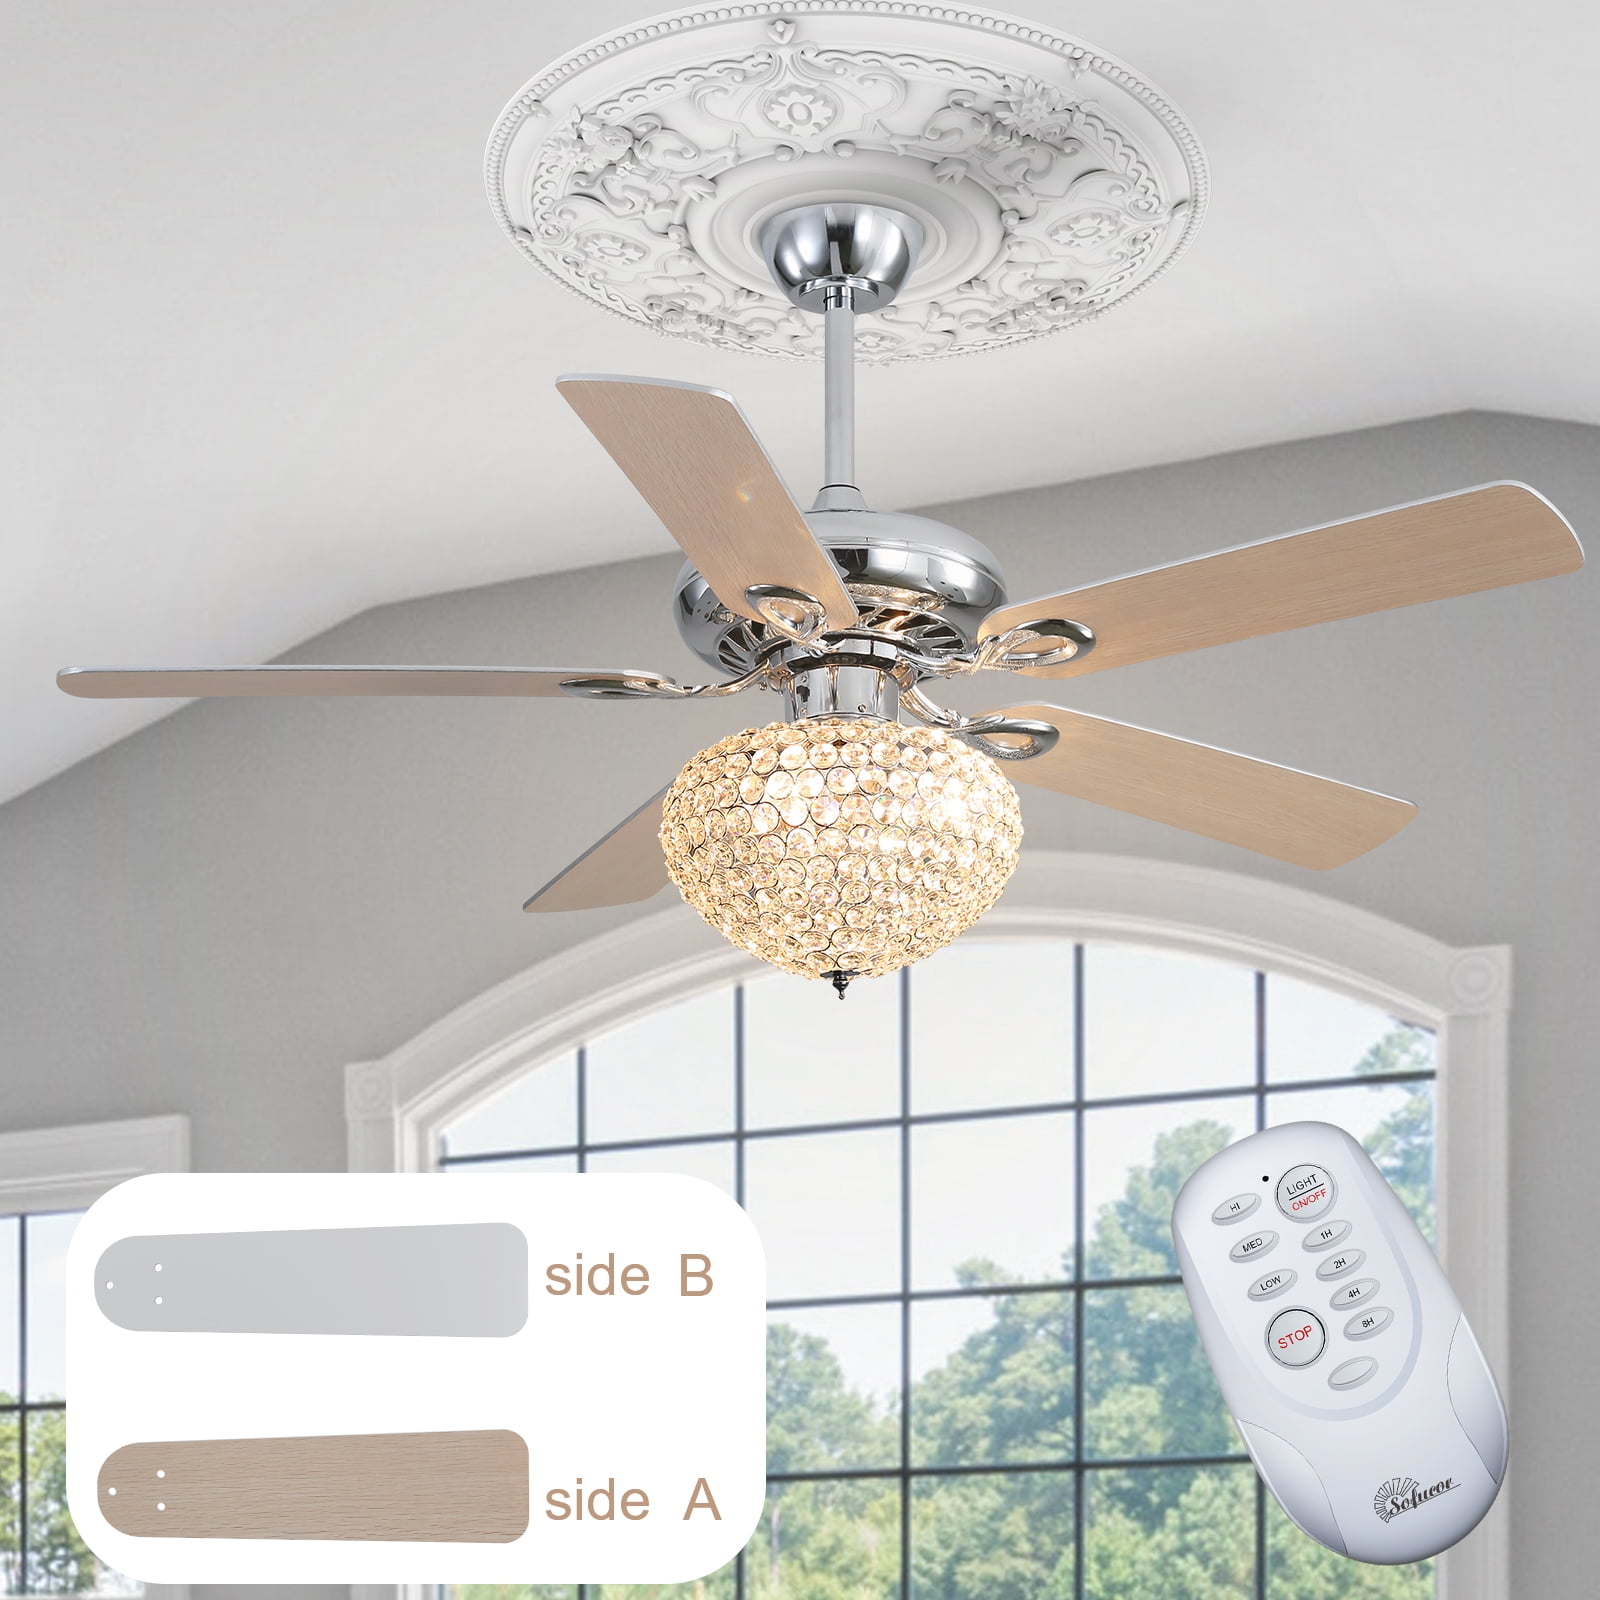 42" LED Ceiling Fan Light Reverse Airflow Home Decor w/ Remote 4 blades 